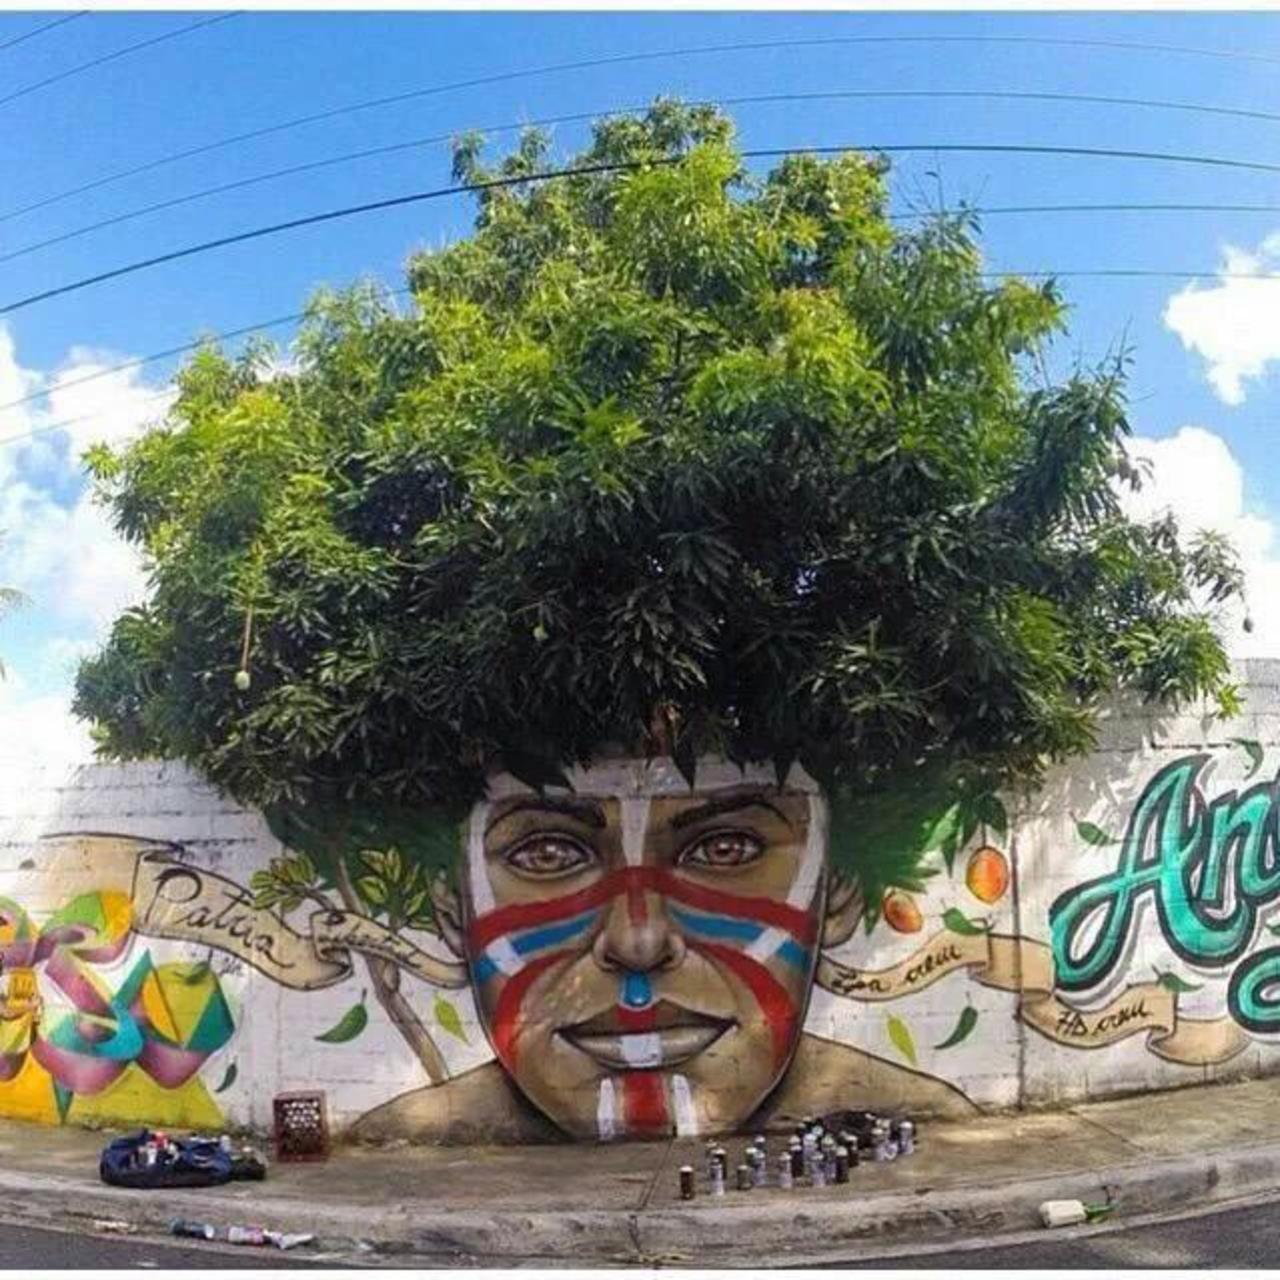 #switch #nature into #streetart #bedifferent #graffiti #arte #art http://t.co/TYy027wfbi